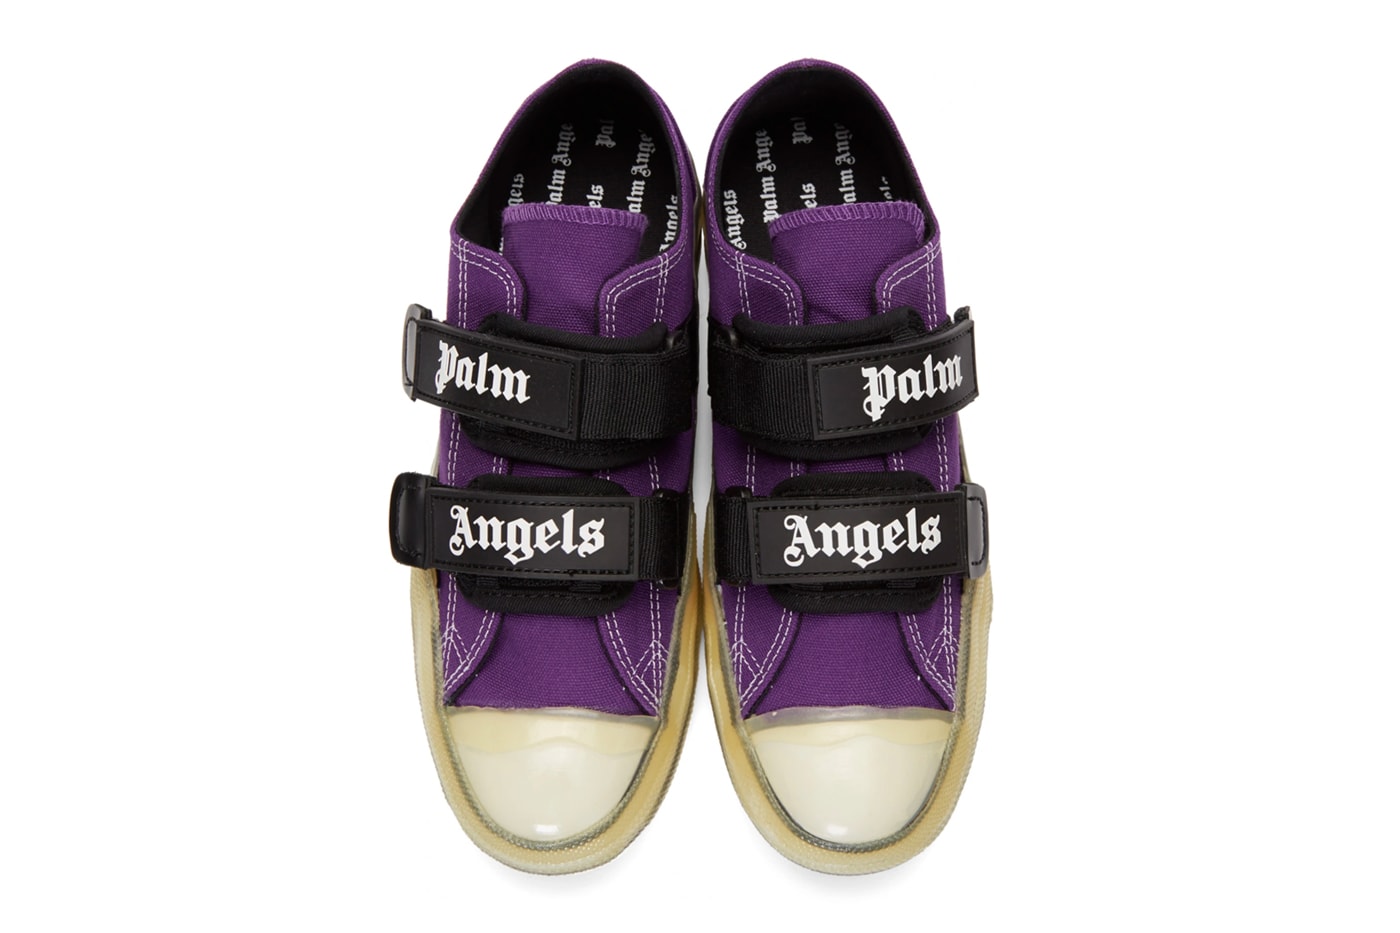 Palm Angels Vulcanized Sneakers SSENSE 